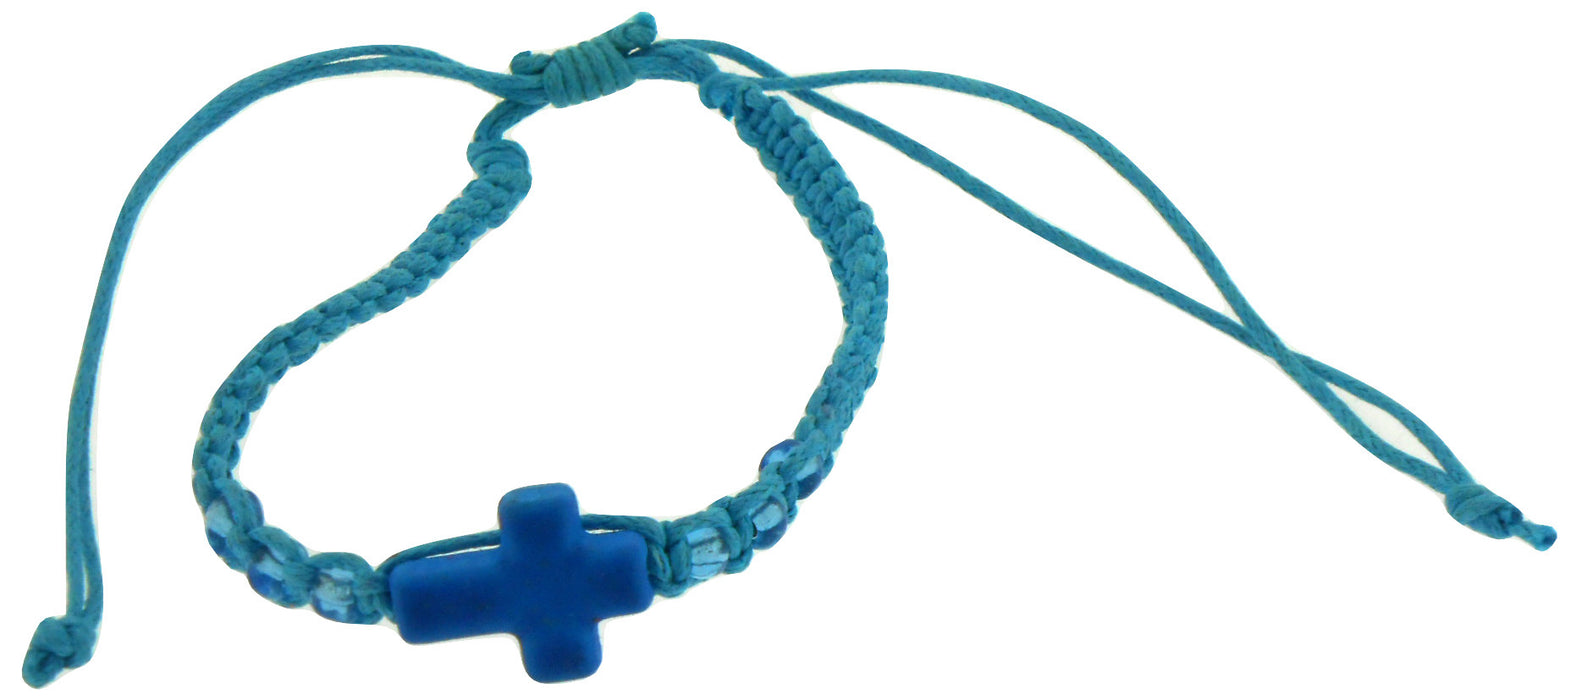 Bracelet-Blue Cotton Adjustable Friendship With Cross (Pk/12)